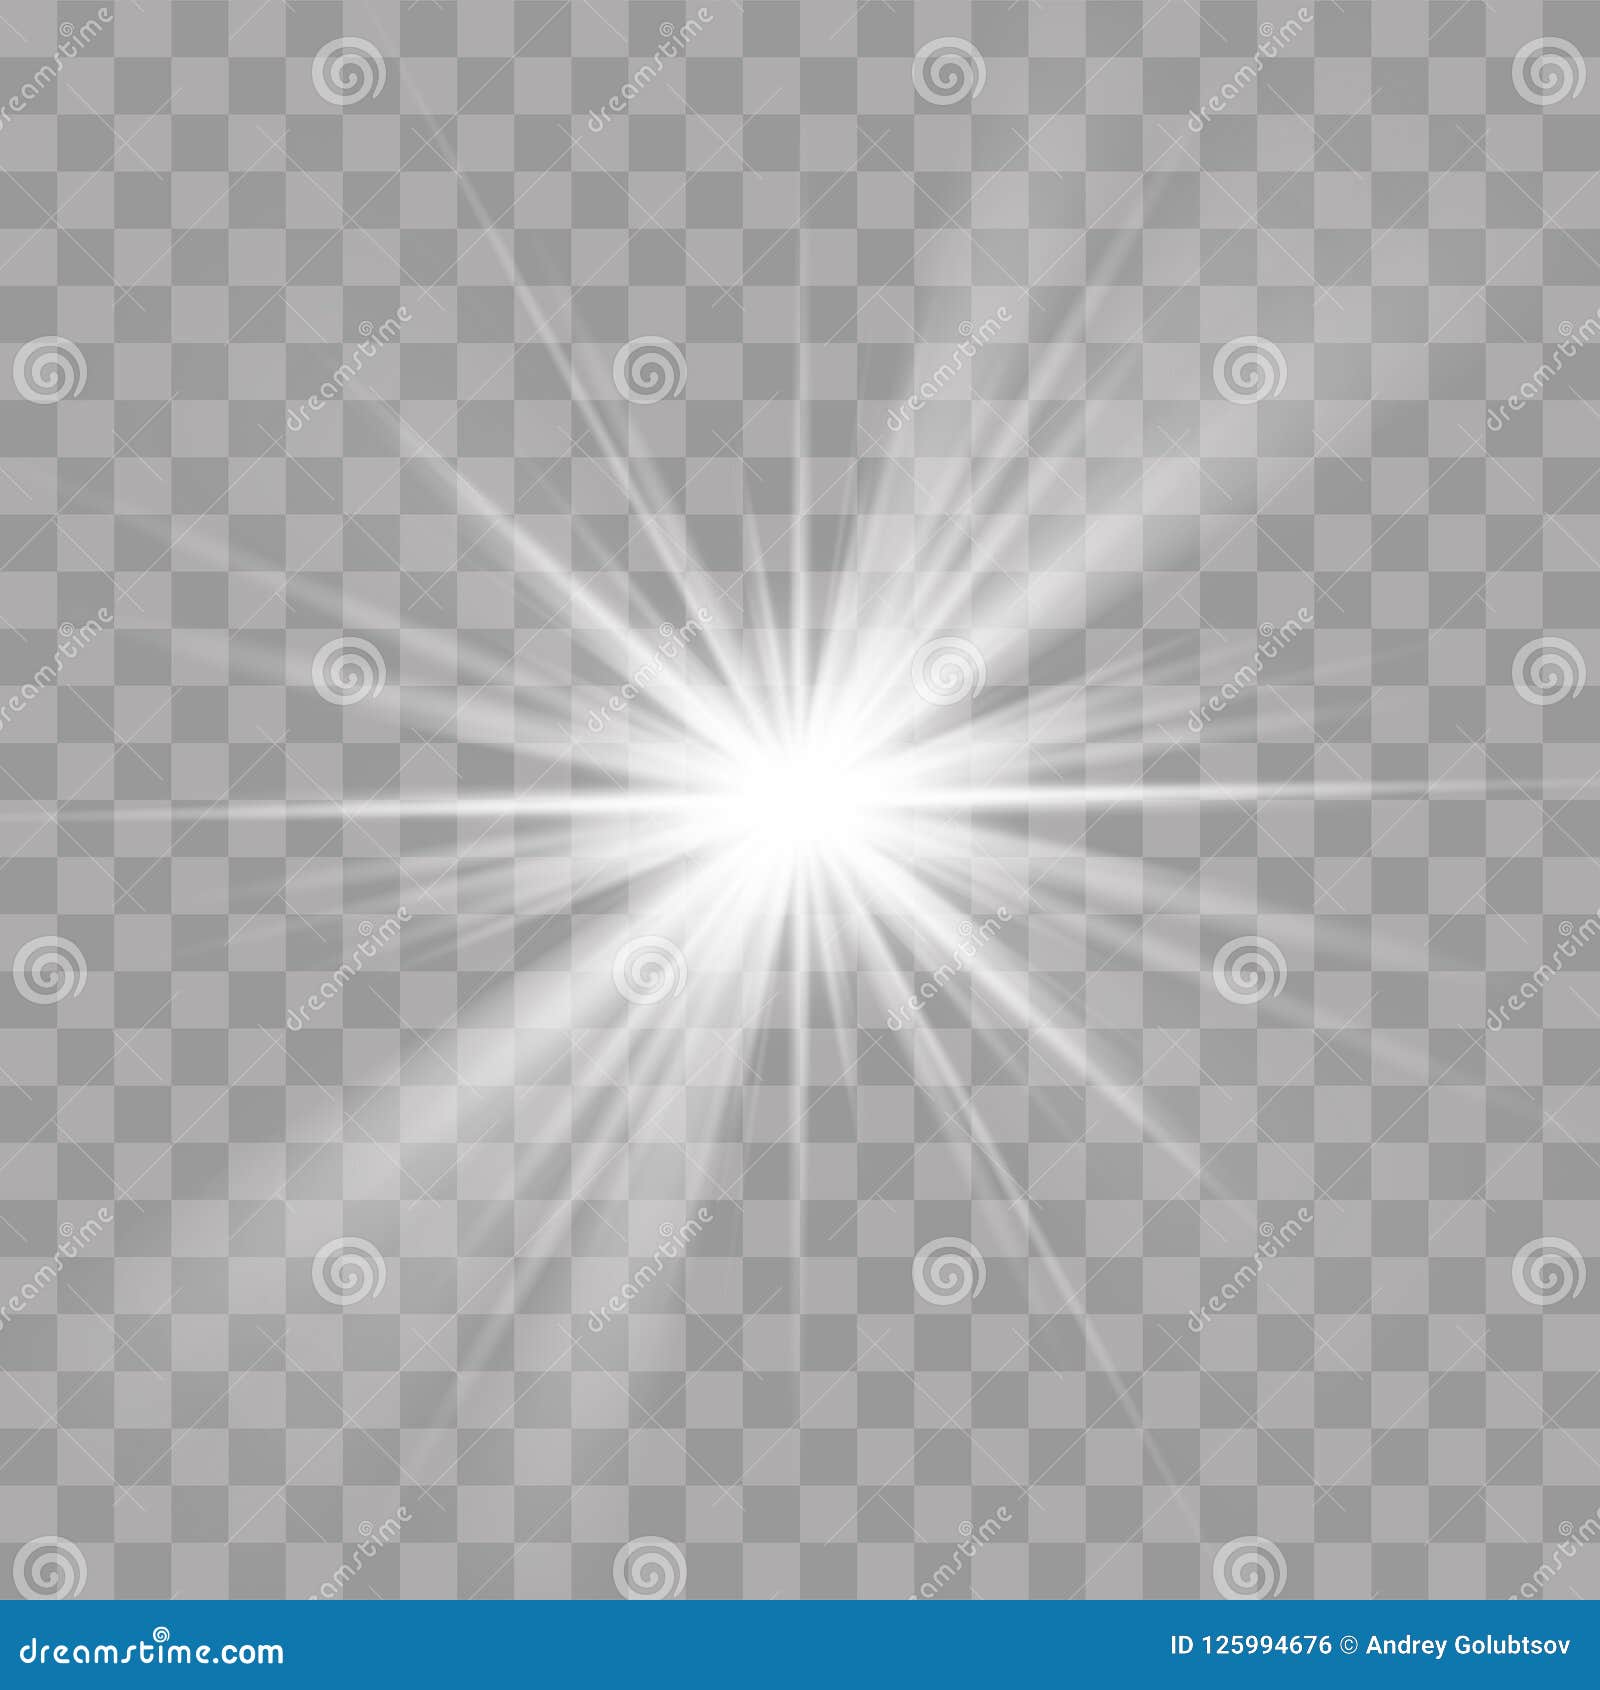 light rays flash sun star shine radiance effect